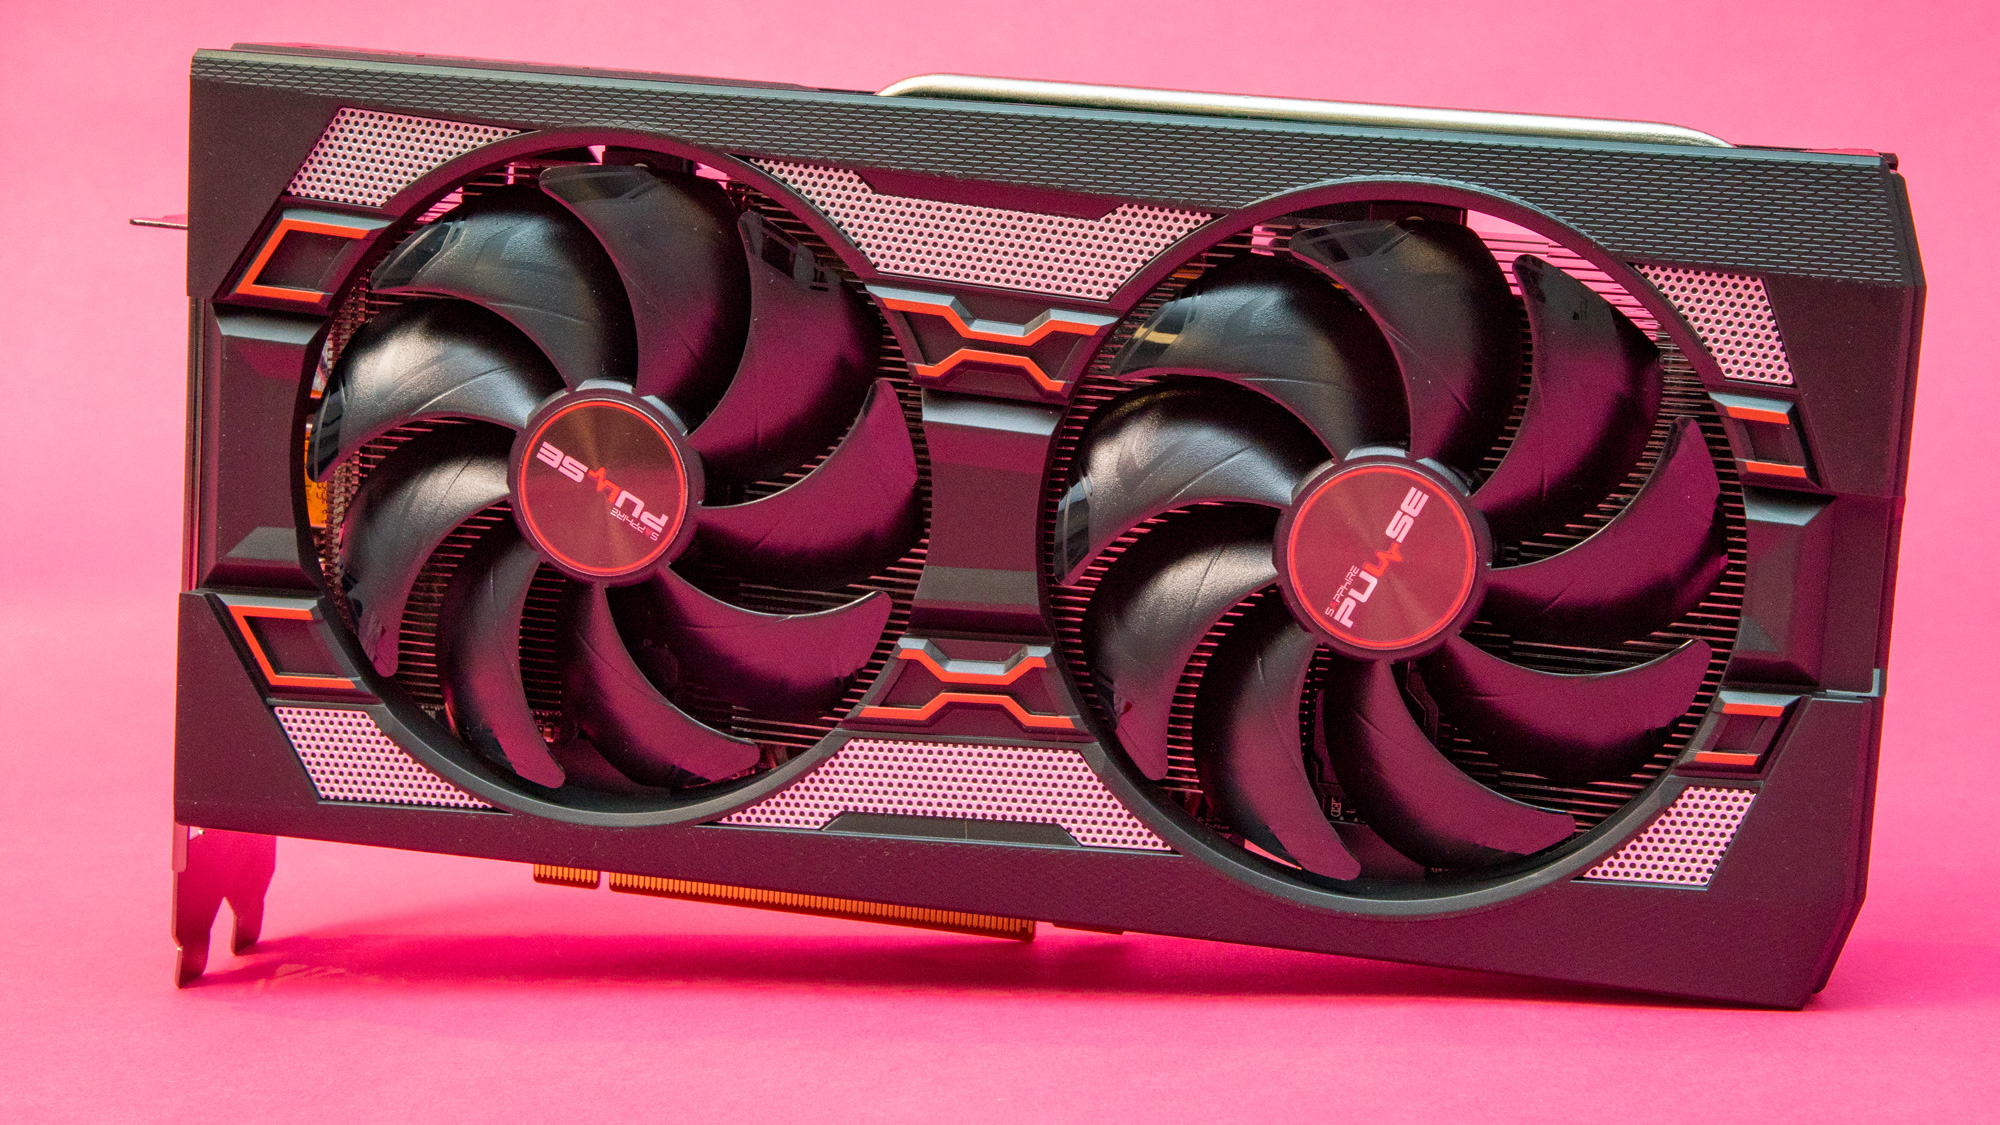 AMD Radeon RX 5600 OEM Specs